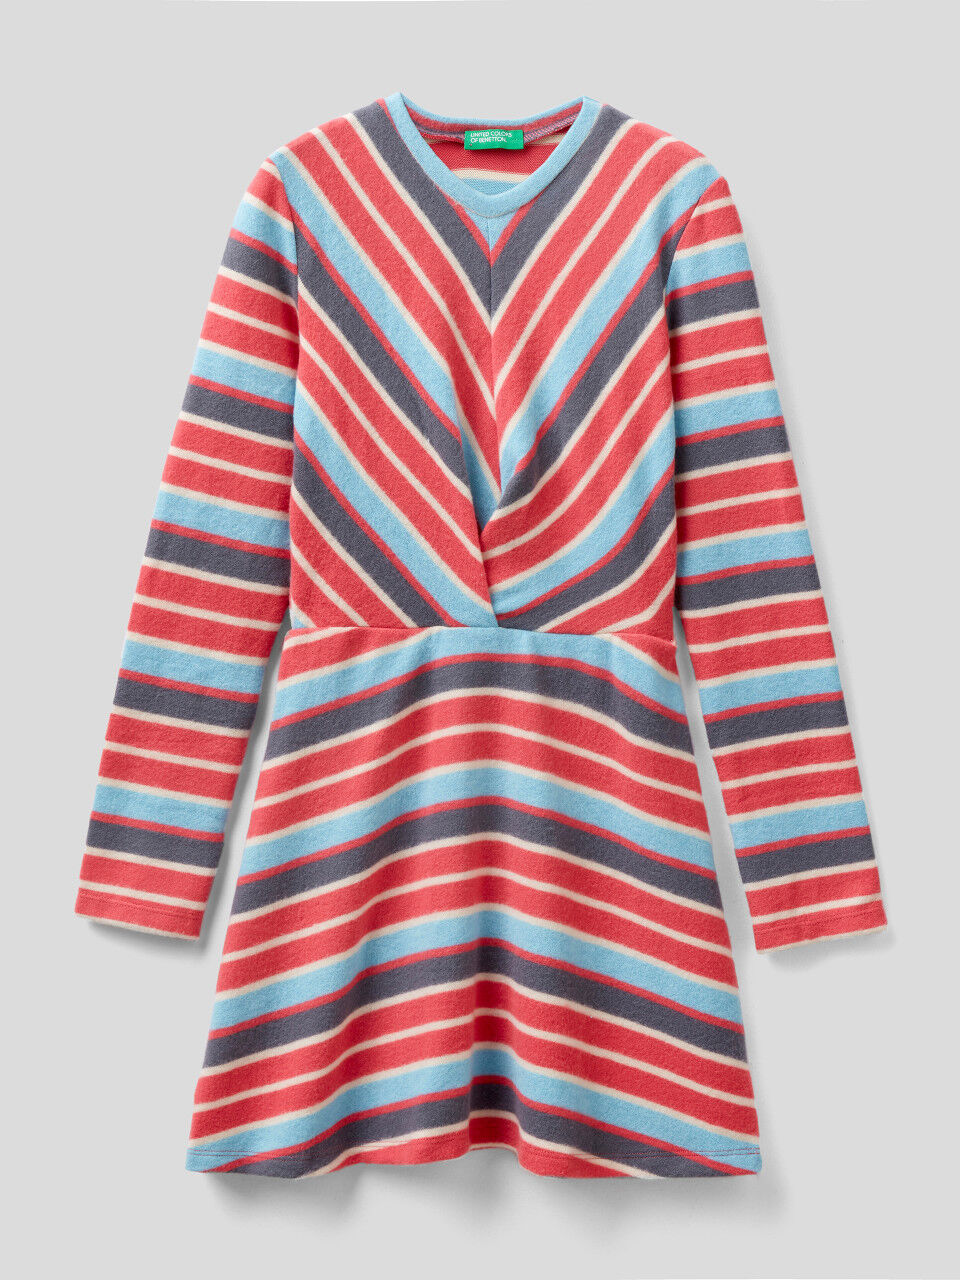 Warm striped dress